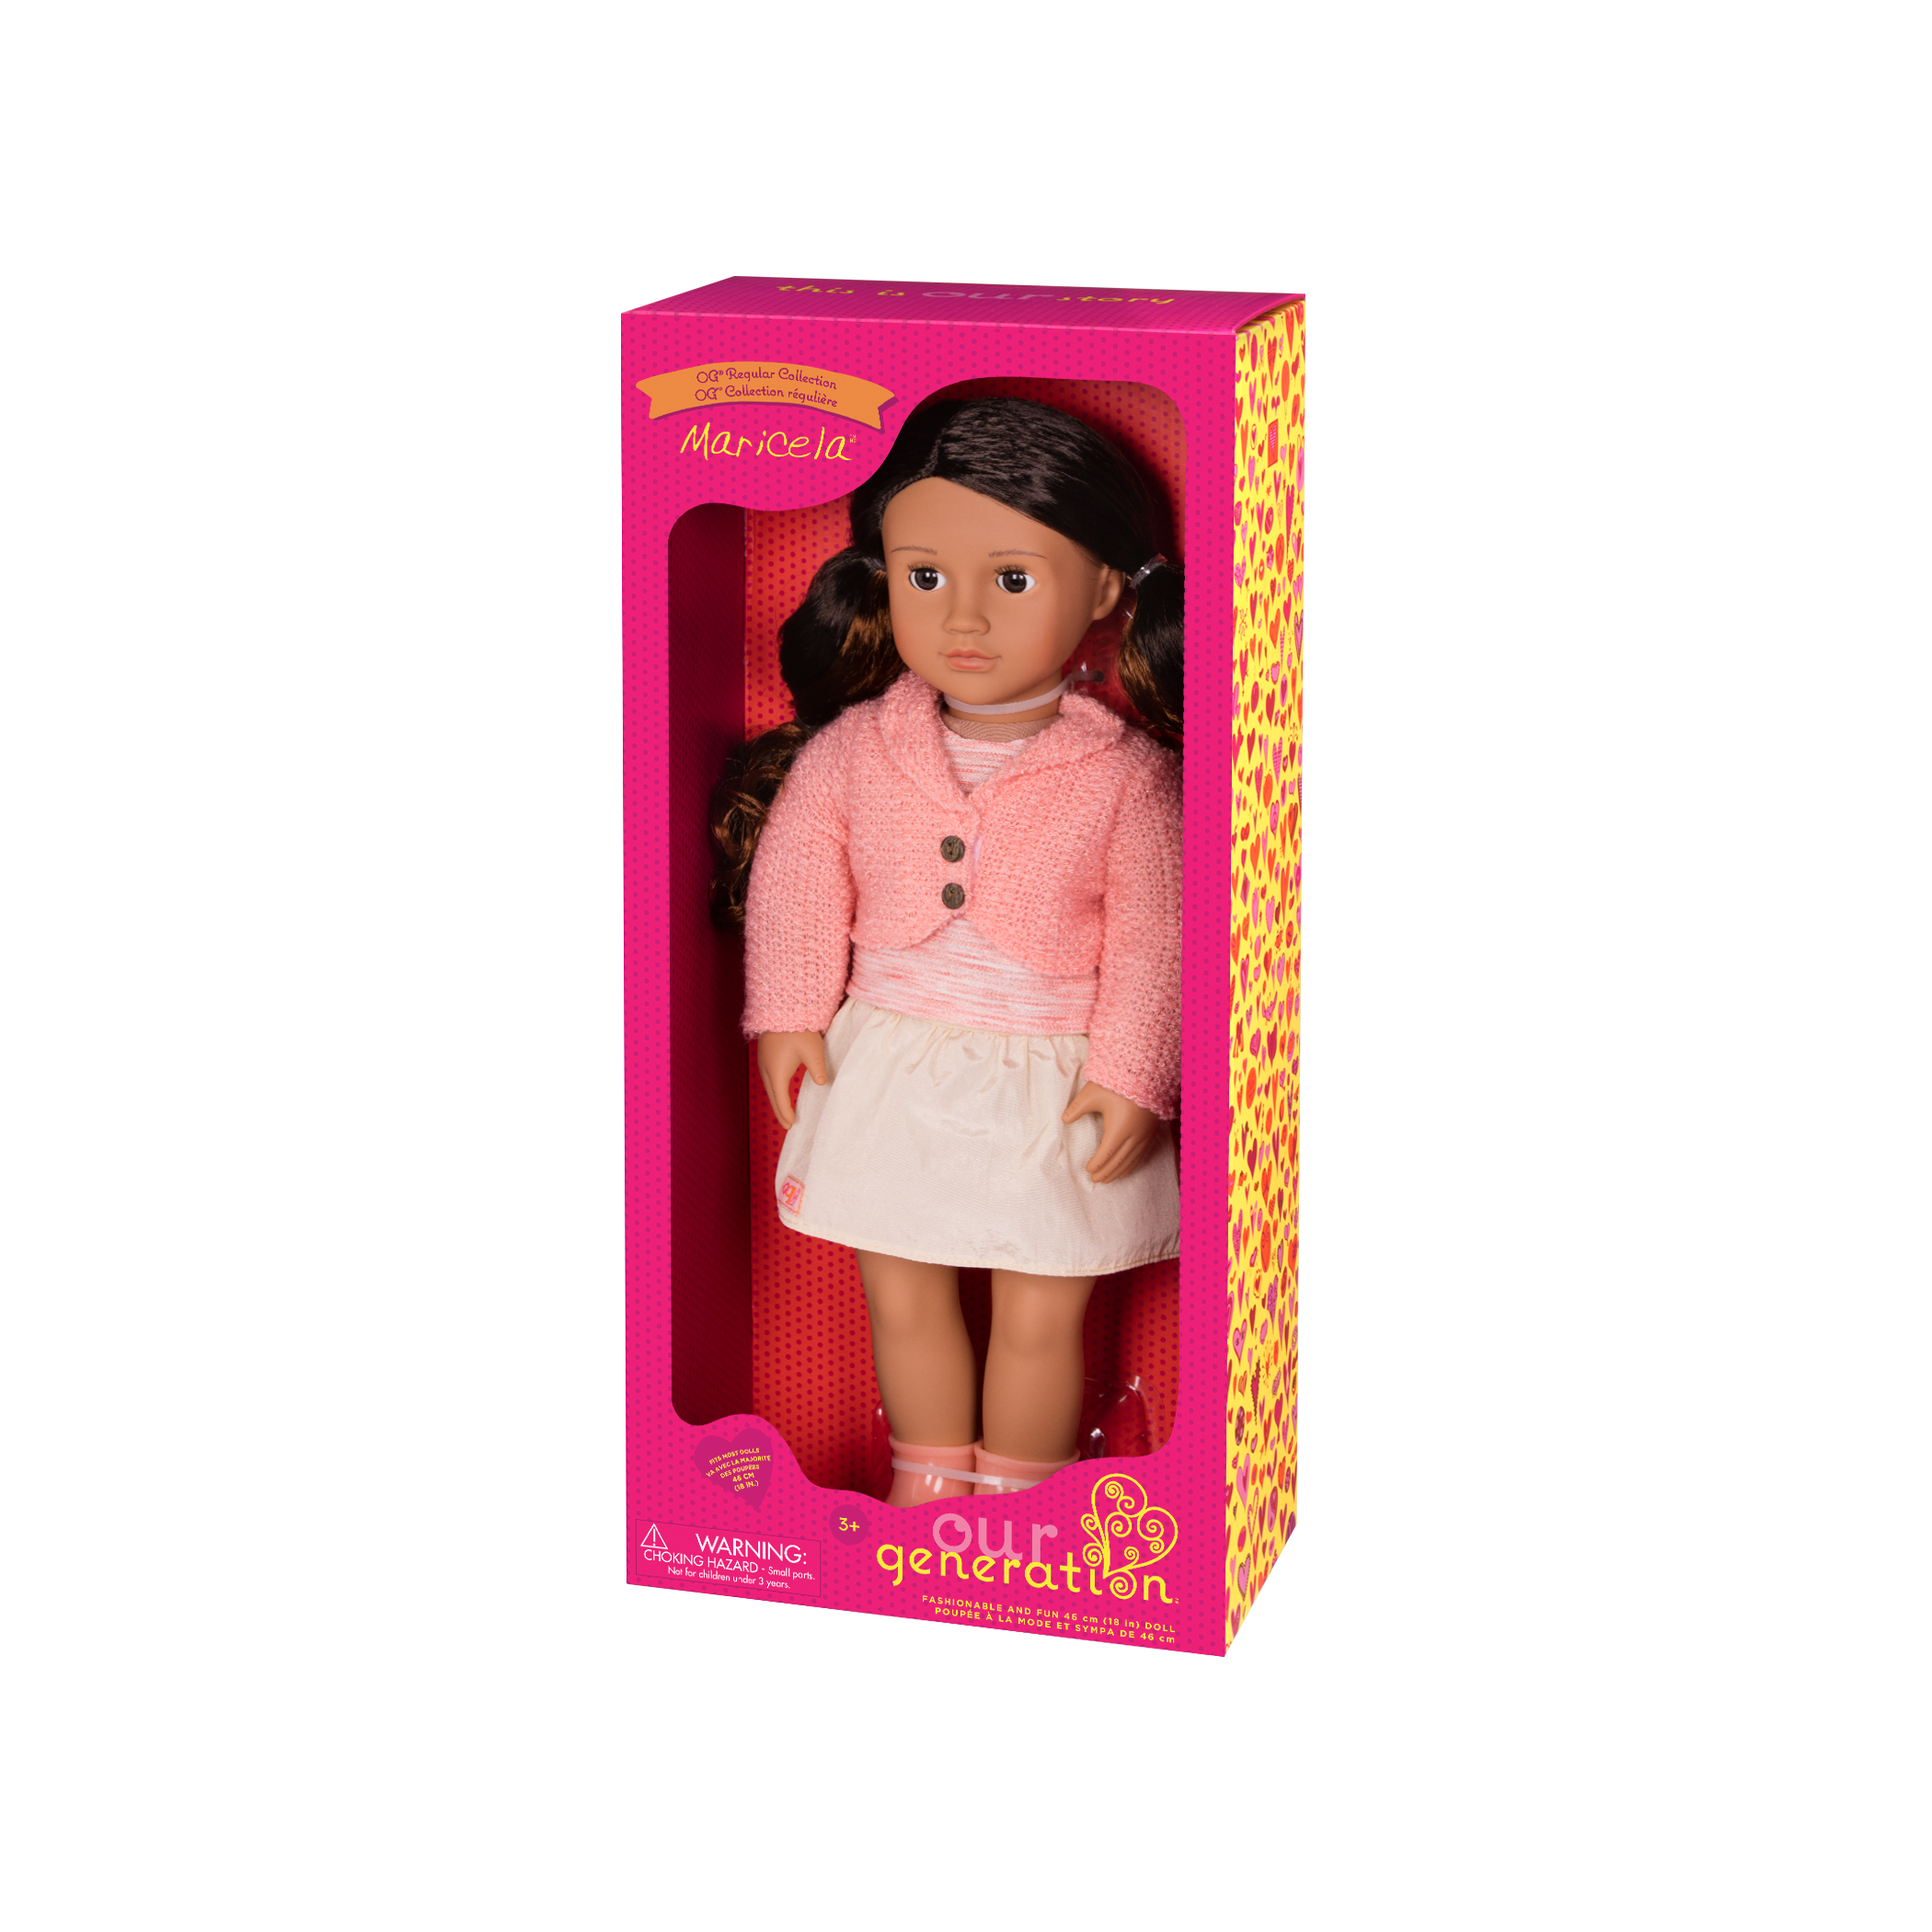 Maricela Regular 18-inch Doll in packaging